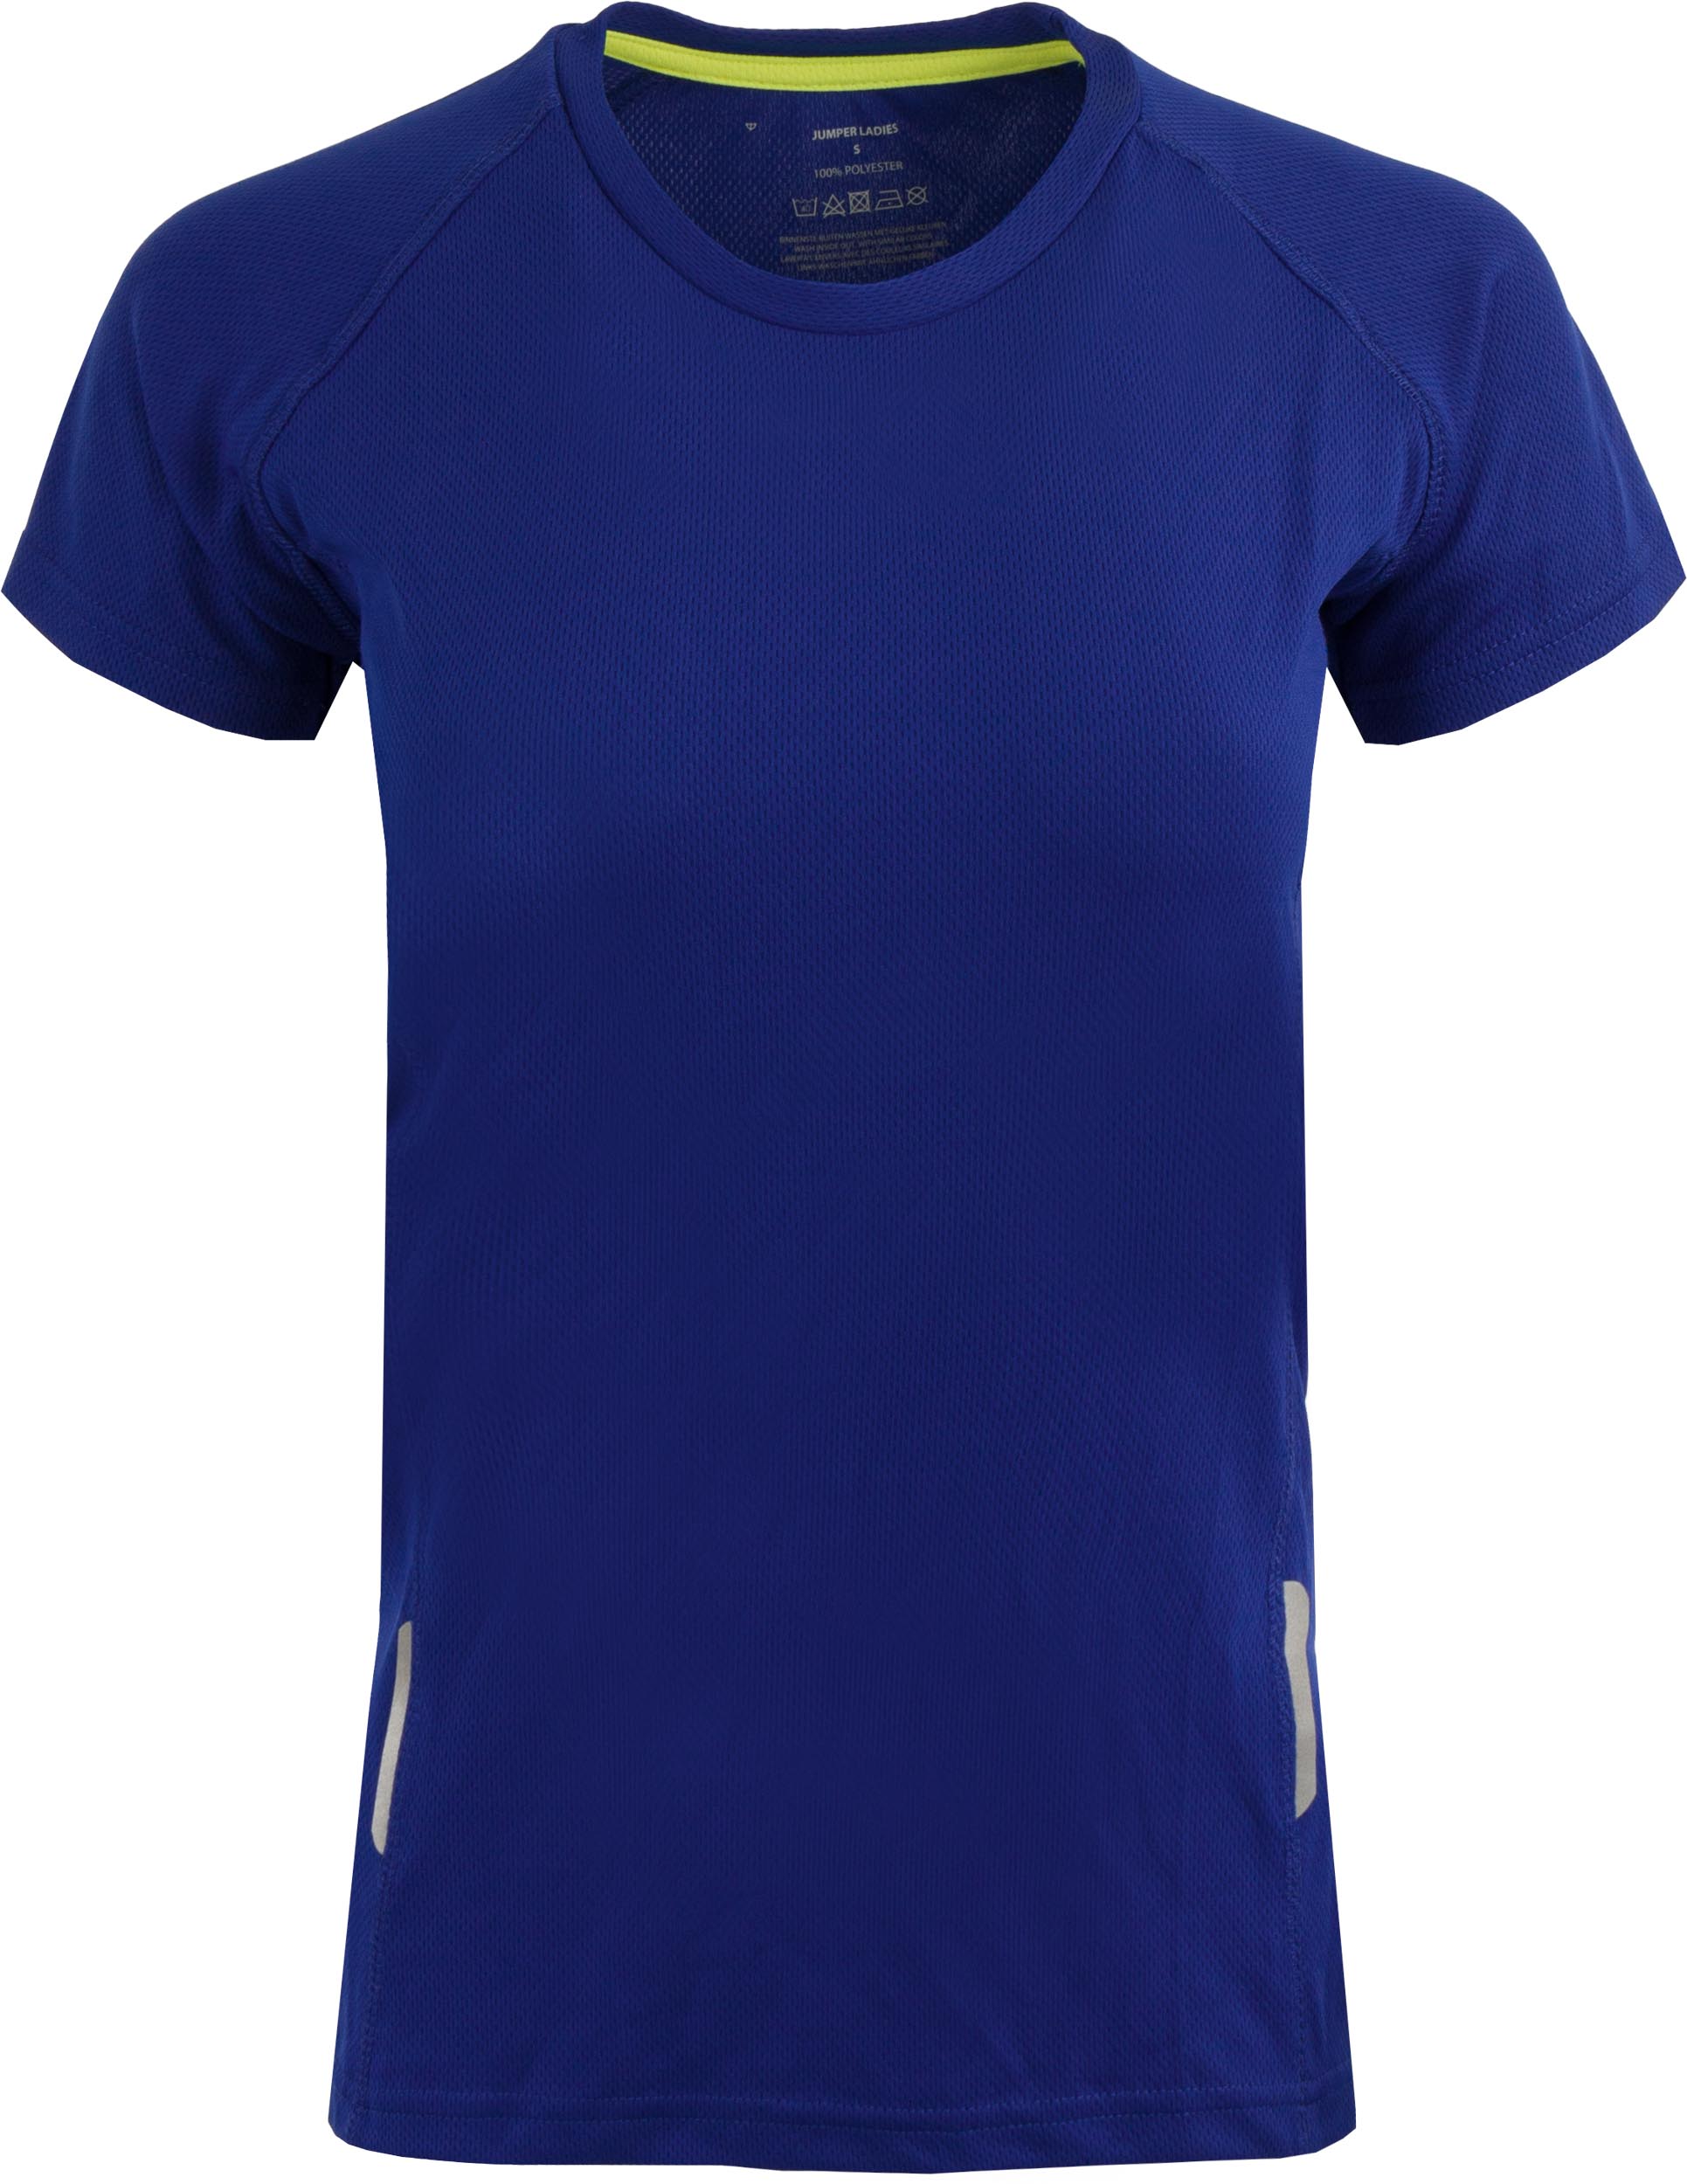 Sportovní triko JUMPER Ladies cobalt|XS